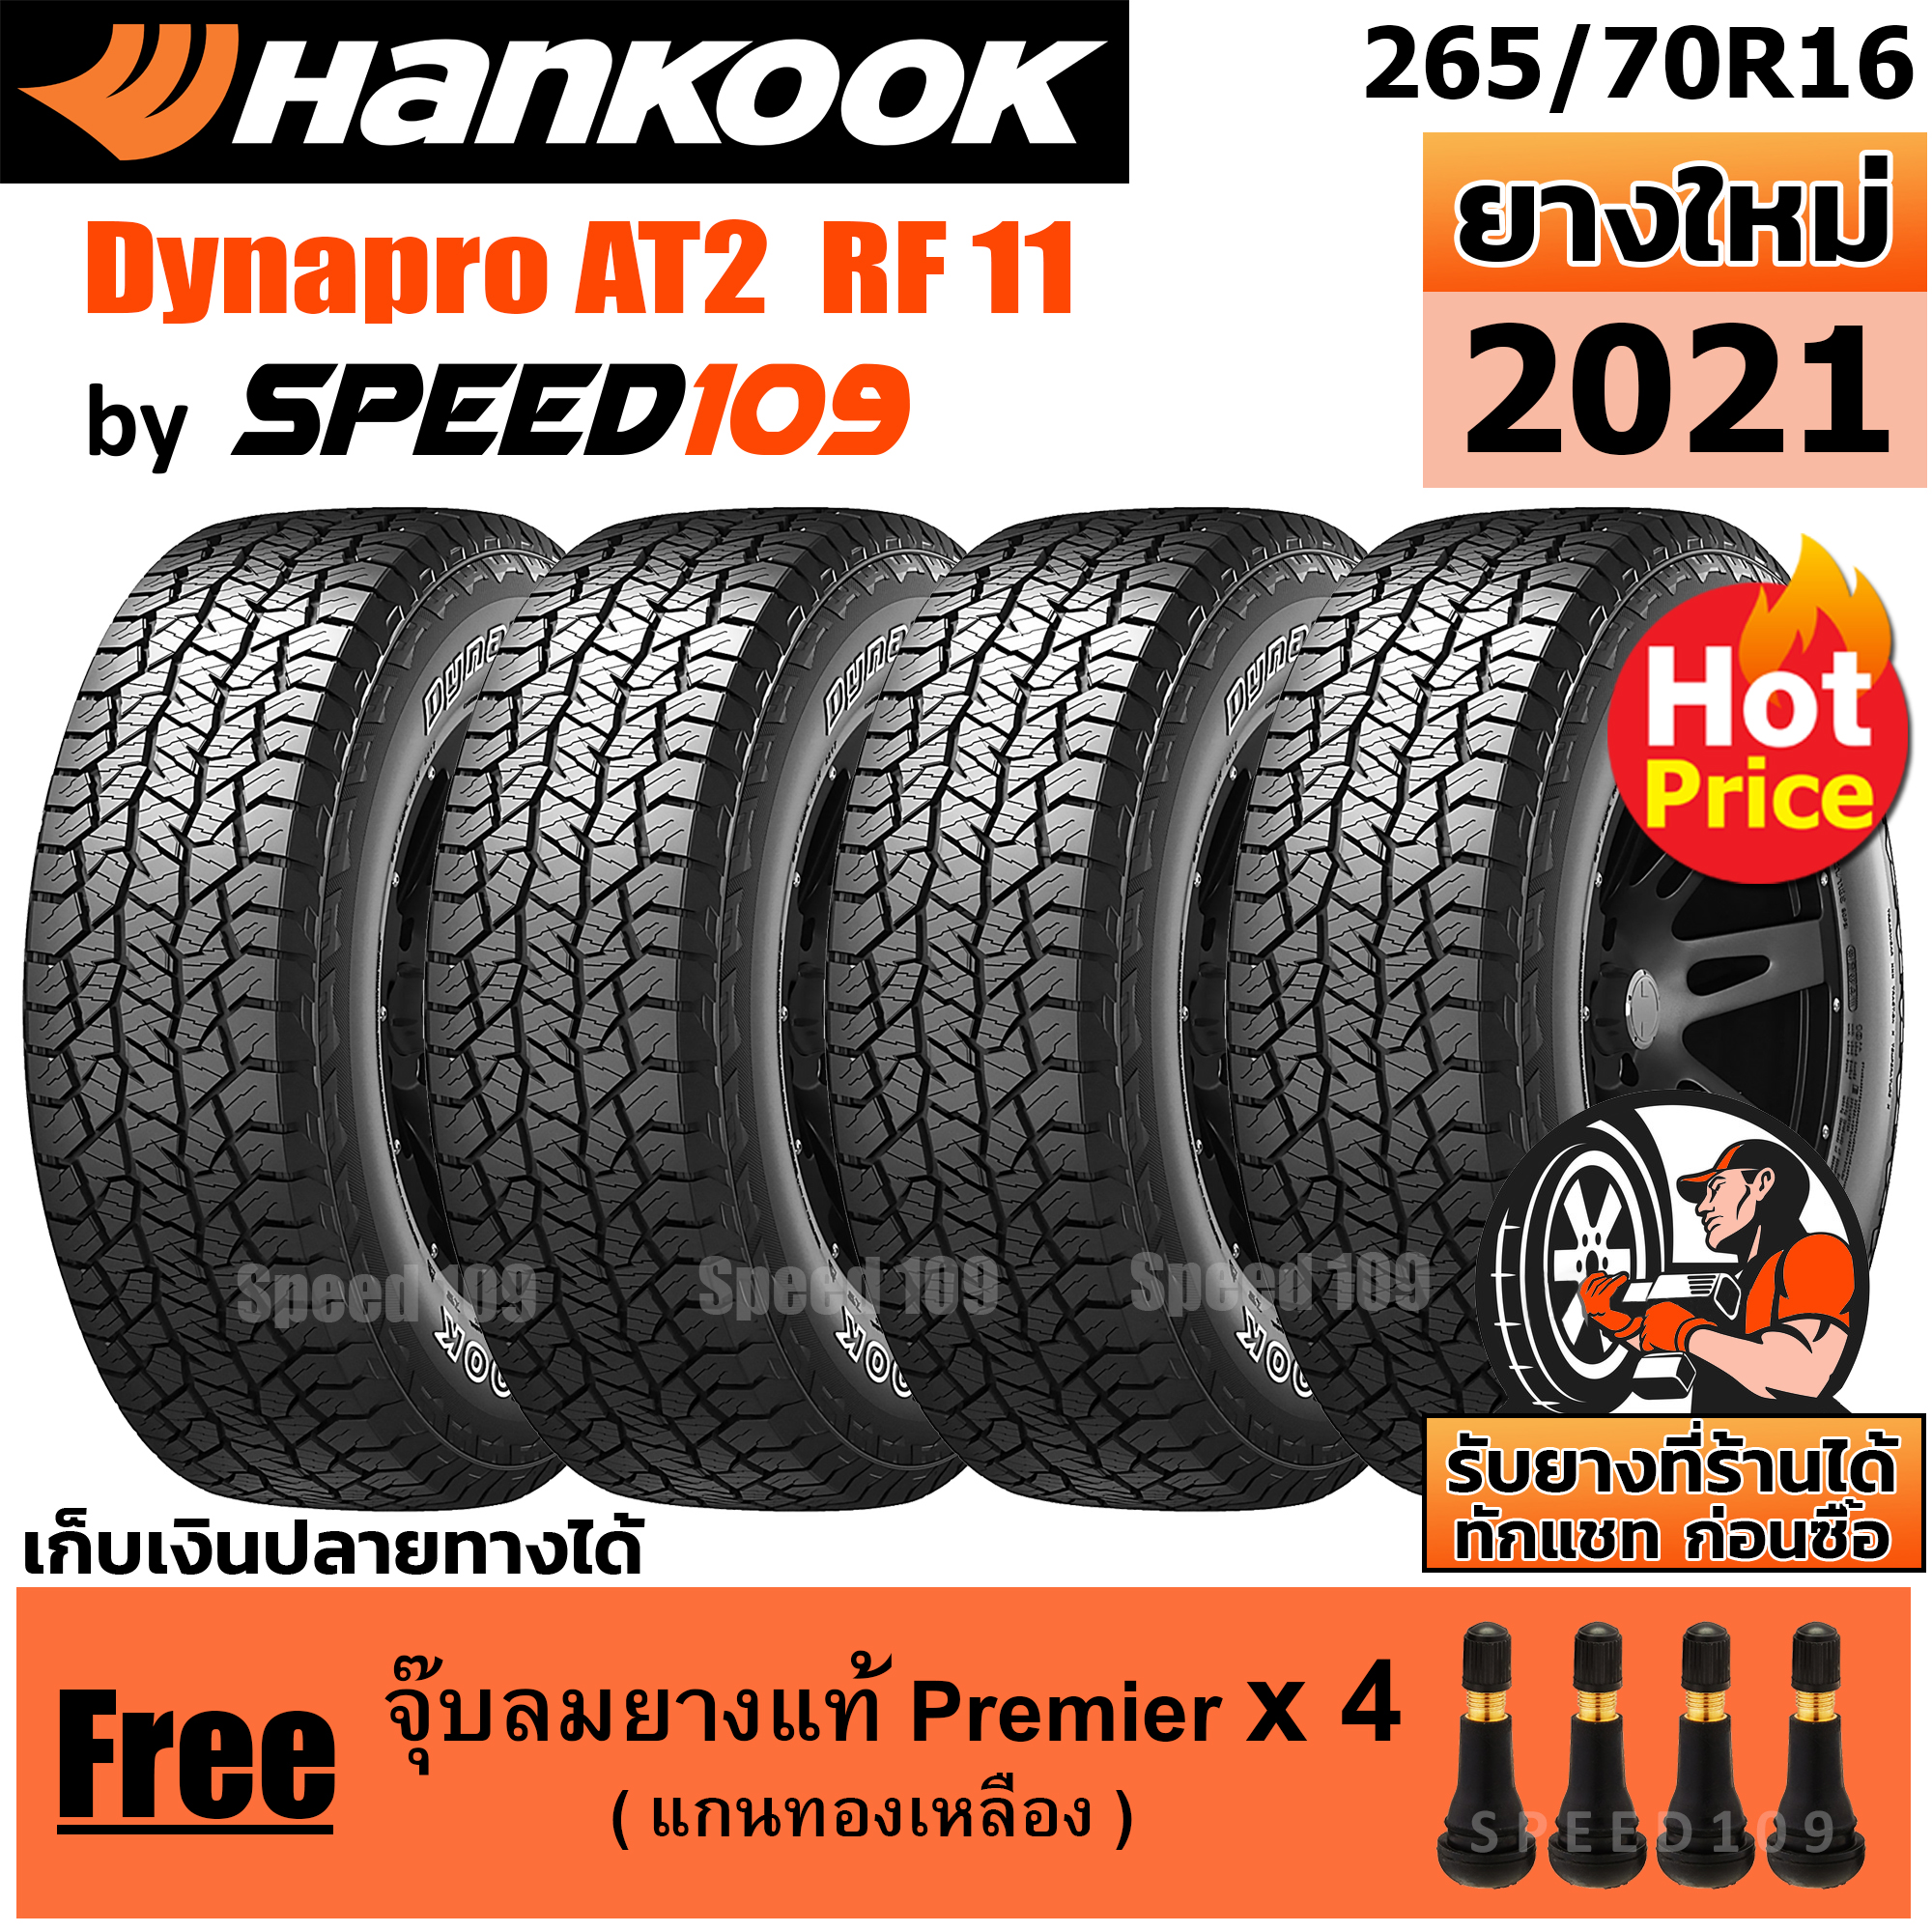 HANKOOK ยางรถยนต์ ขอบ 16 ขนาด 265/70R16 รุ่น Dynapro AT2  RF11 - 4 เส้น (ปี 2021)